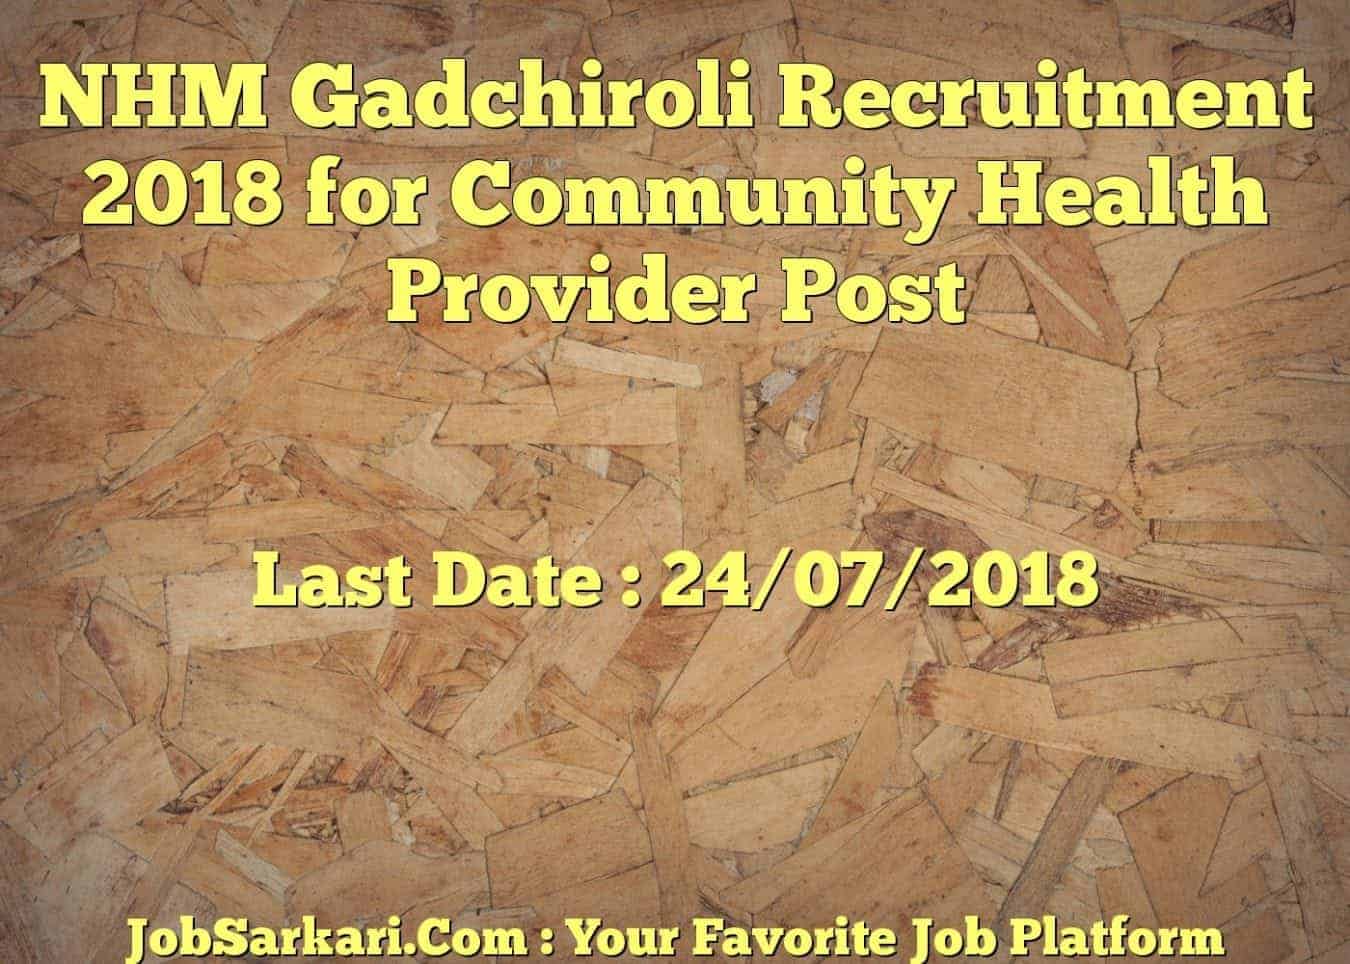 NHM Gadchiroli Recruitment 2018 for Community Health Provider Post